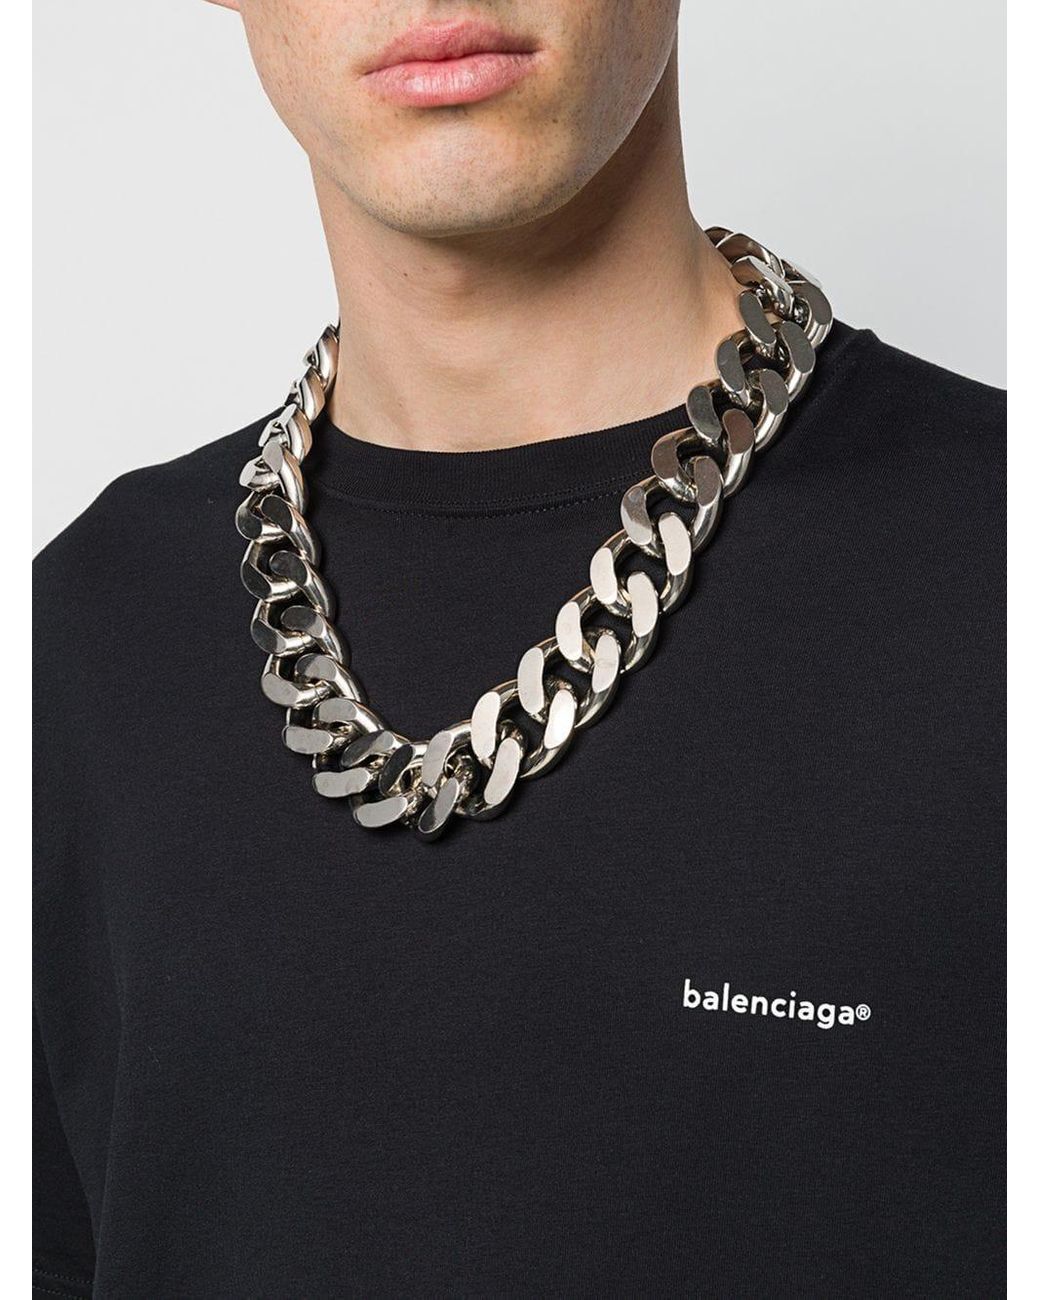 Balenciaga Thick Chain Necklace in Metallic for Men | Lyst Canada